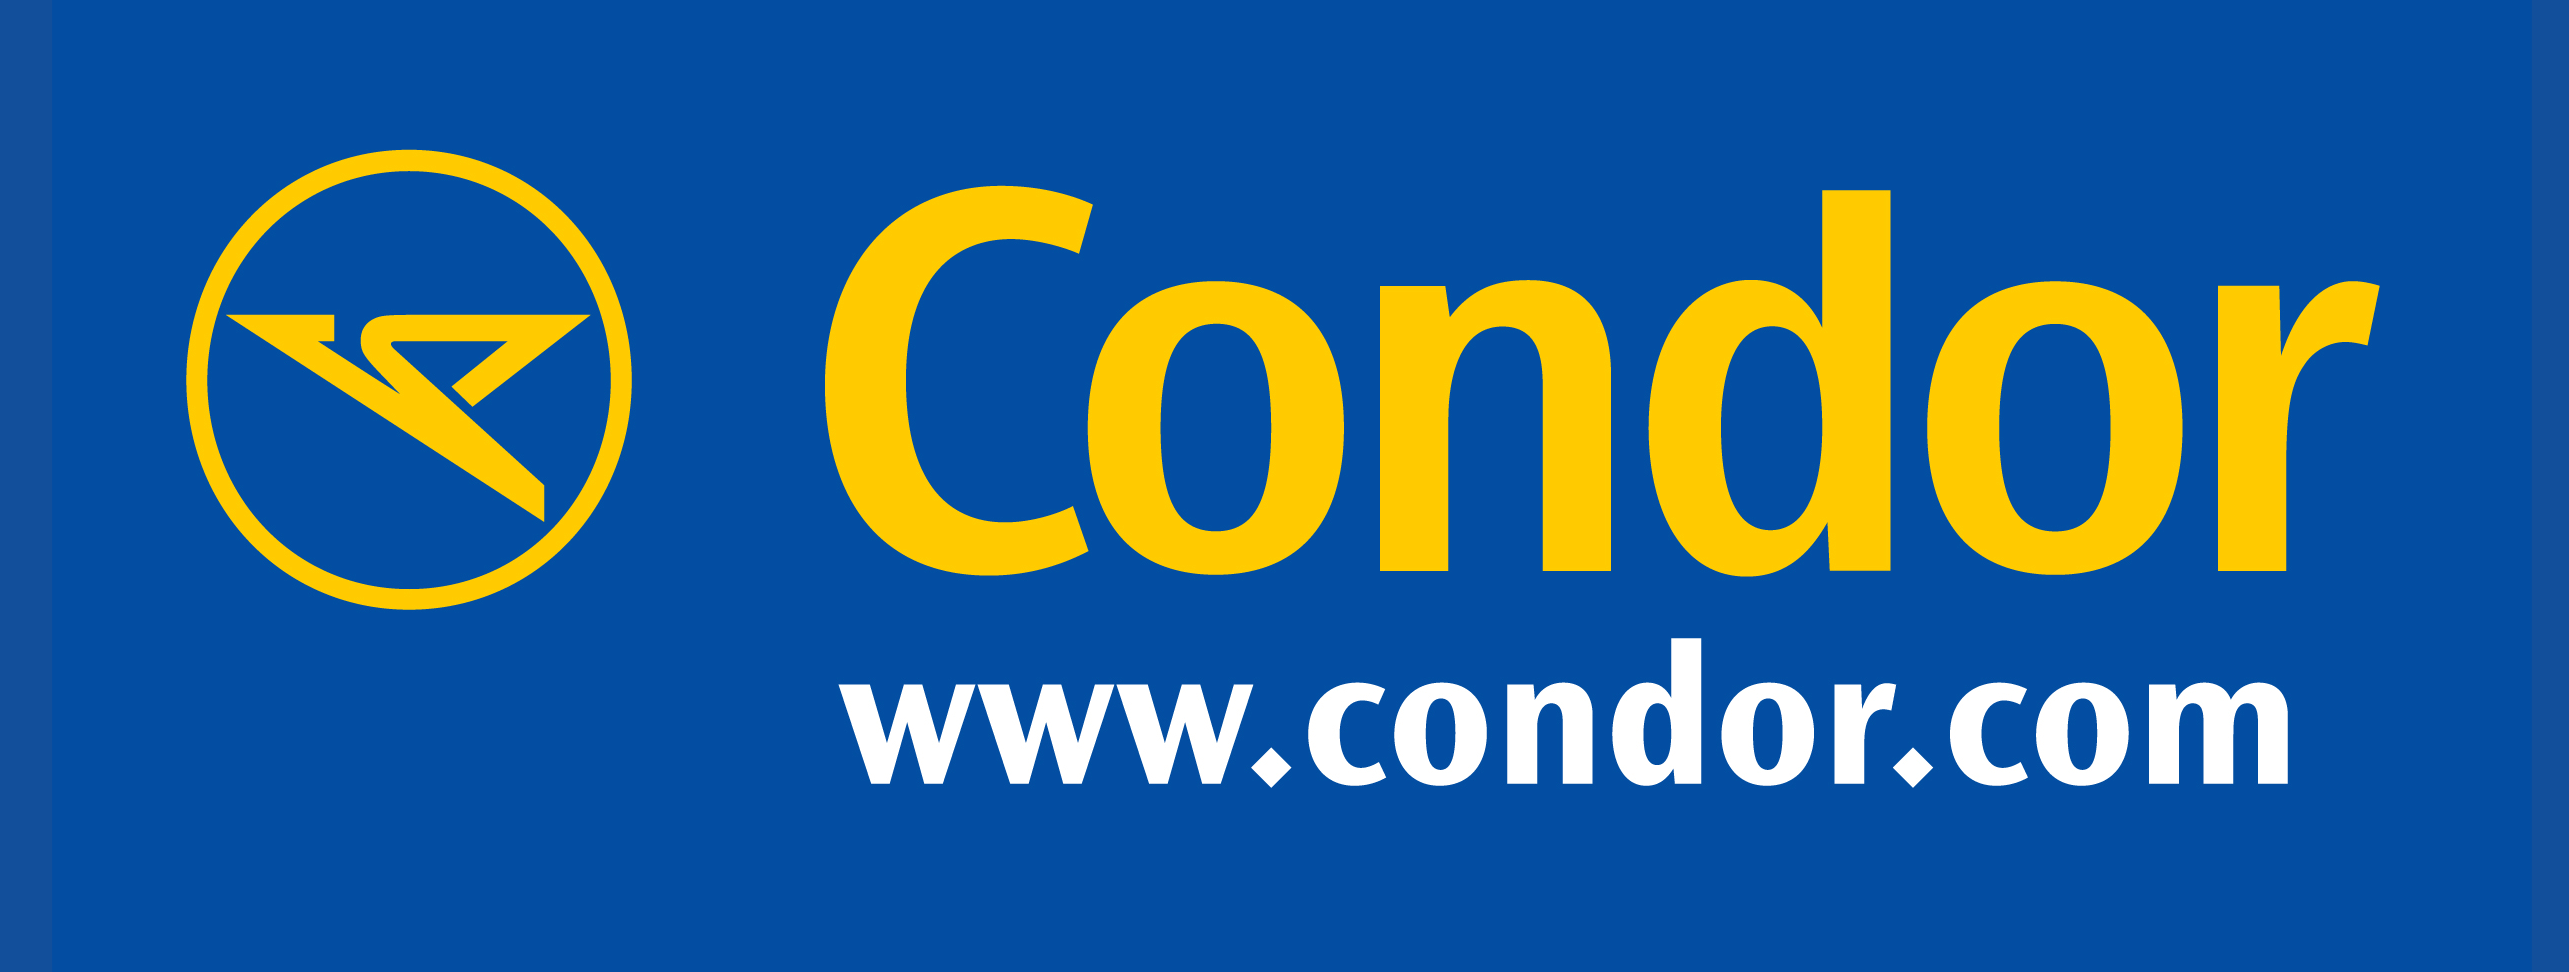 Blue Condor Logo - File:Condor logo.png - Wikimedia Commons